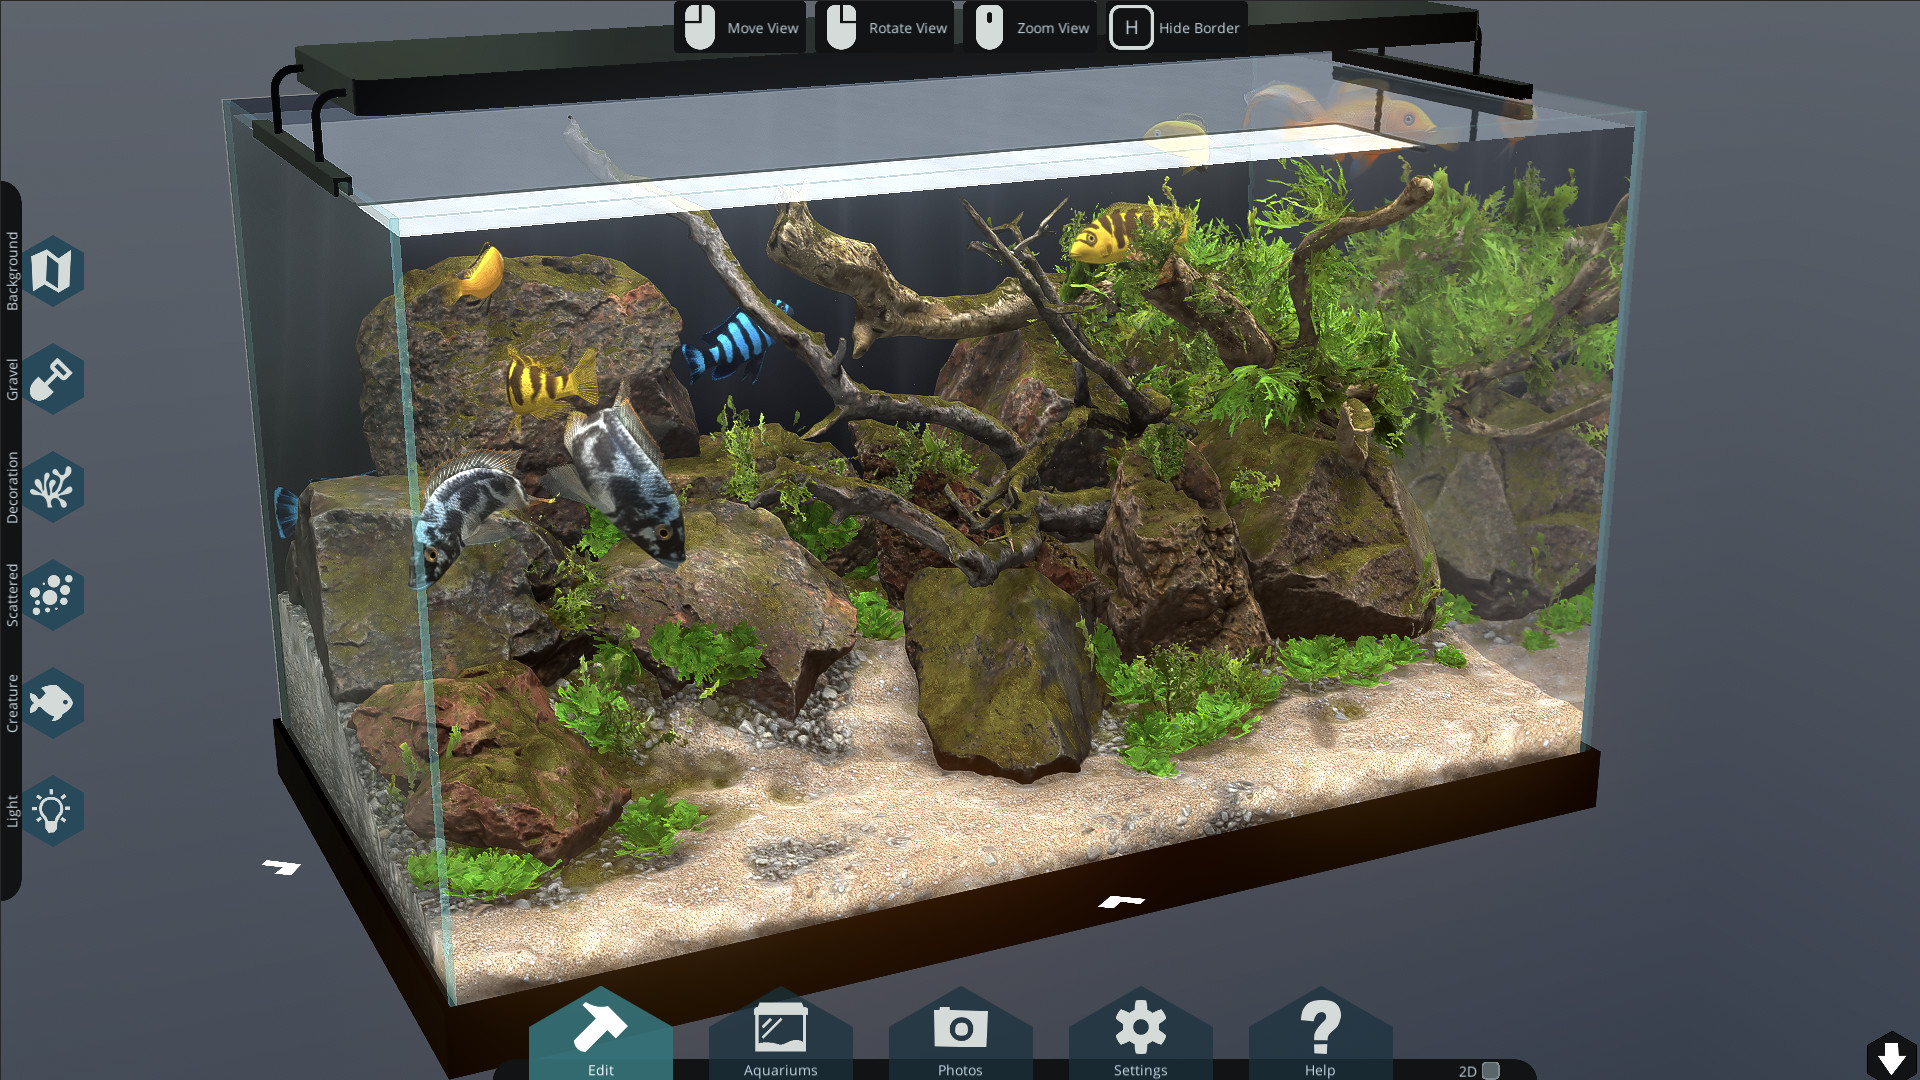 Behind Glass: Aquarium Simulator on Steam